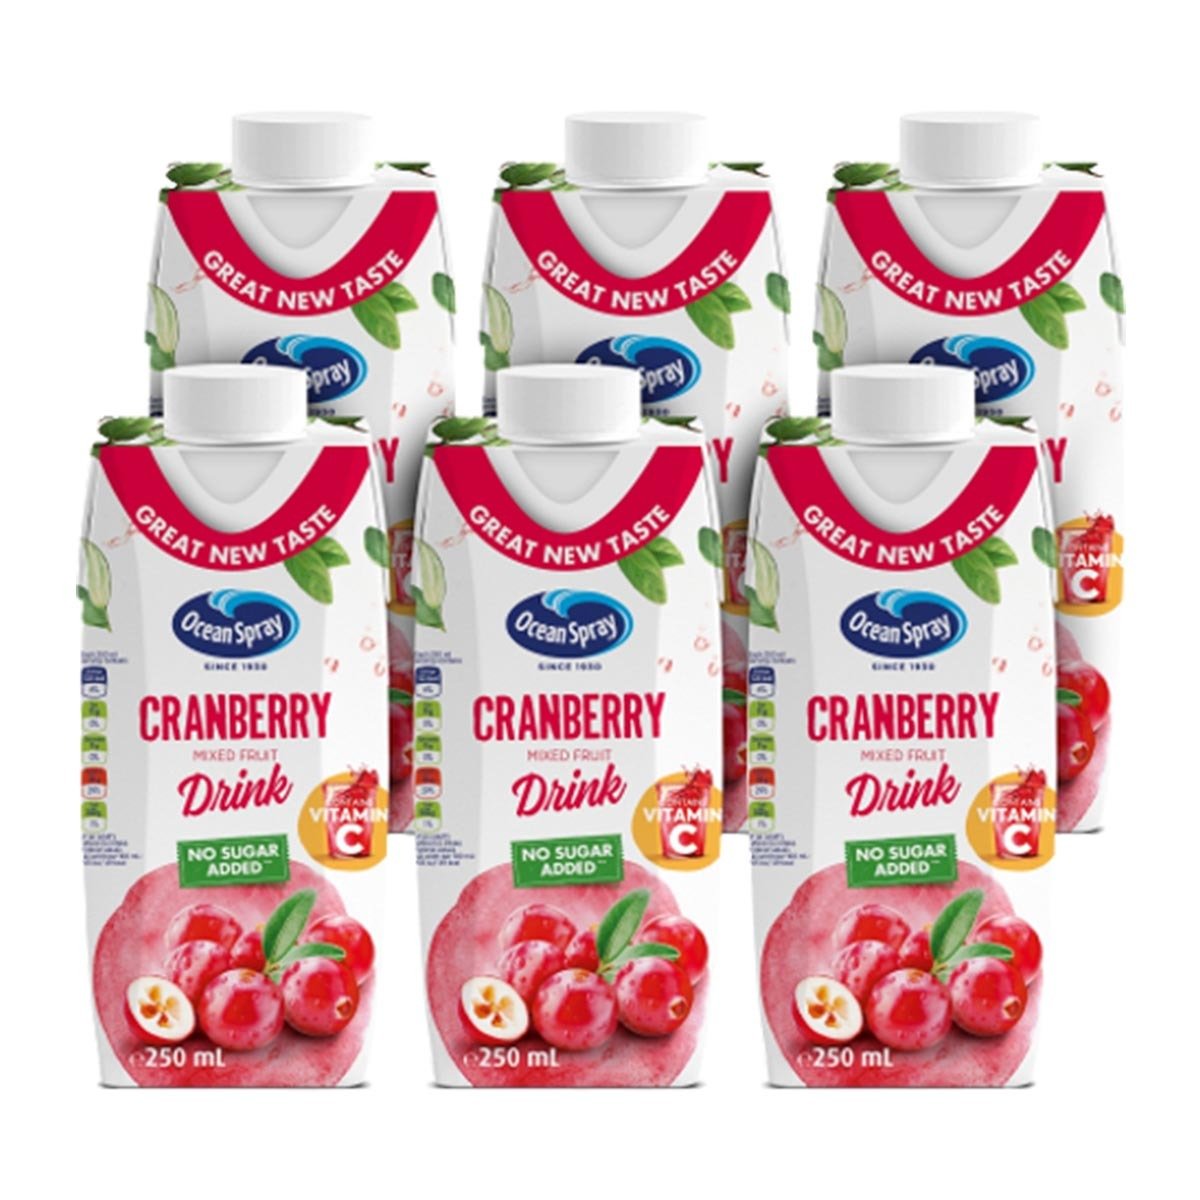 Ocean Spray Cranberry Mixed Fruit Drink No Added Sugar 6 x 250 ml